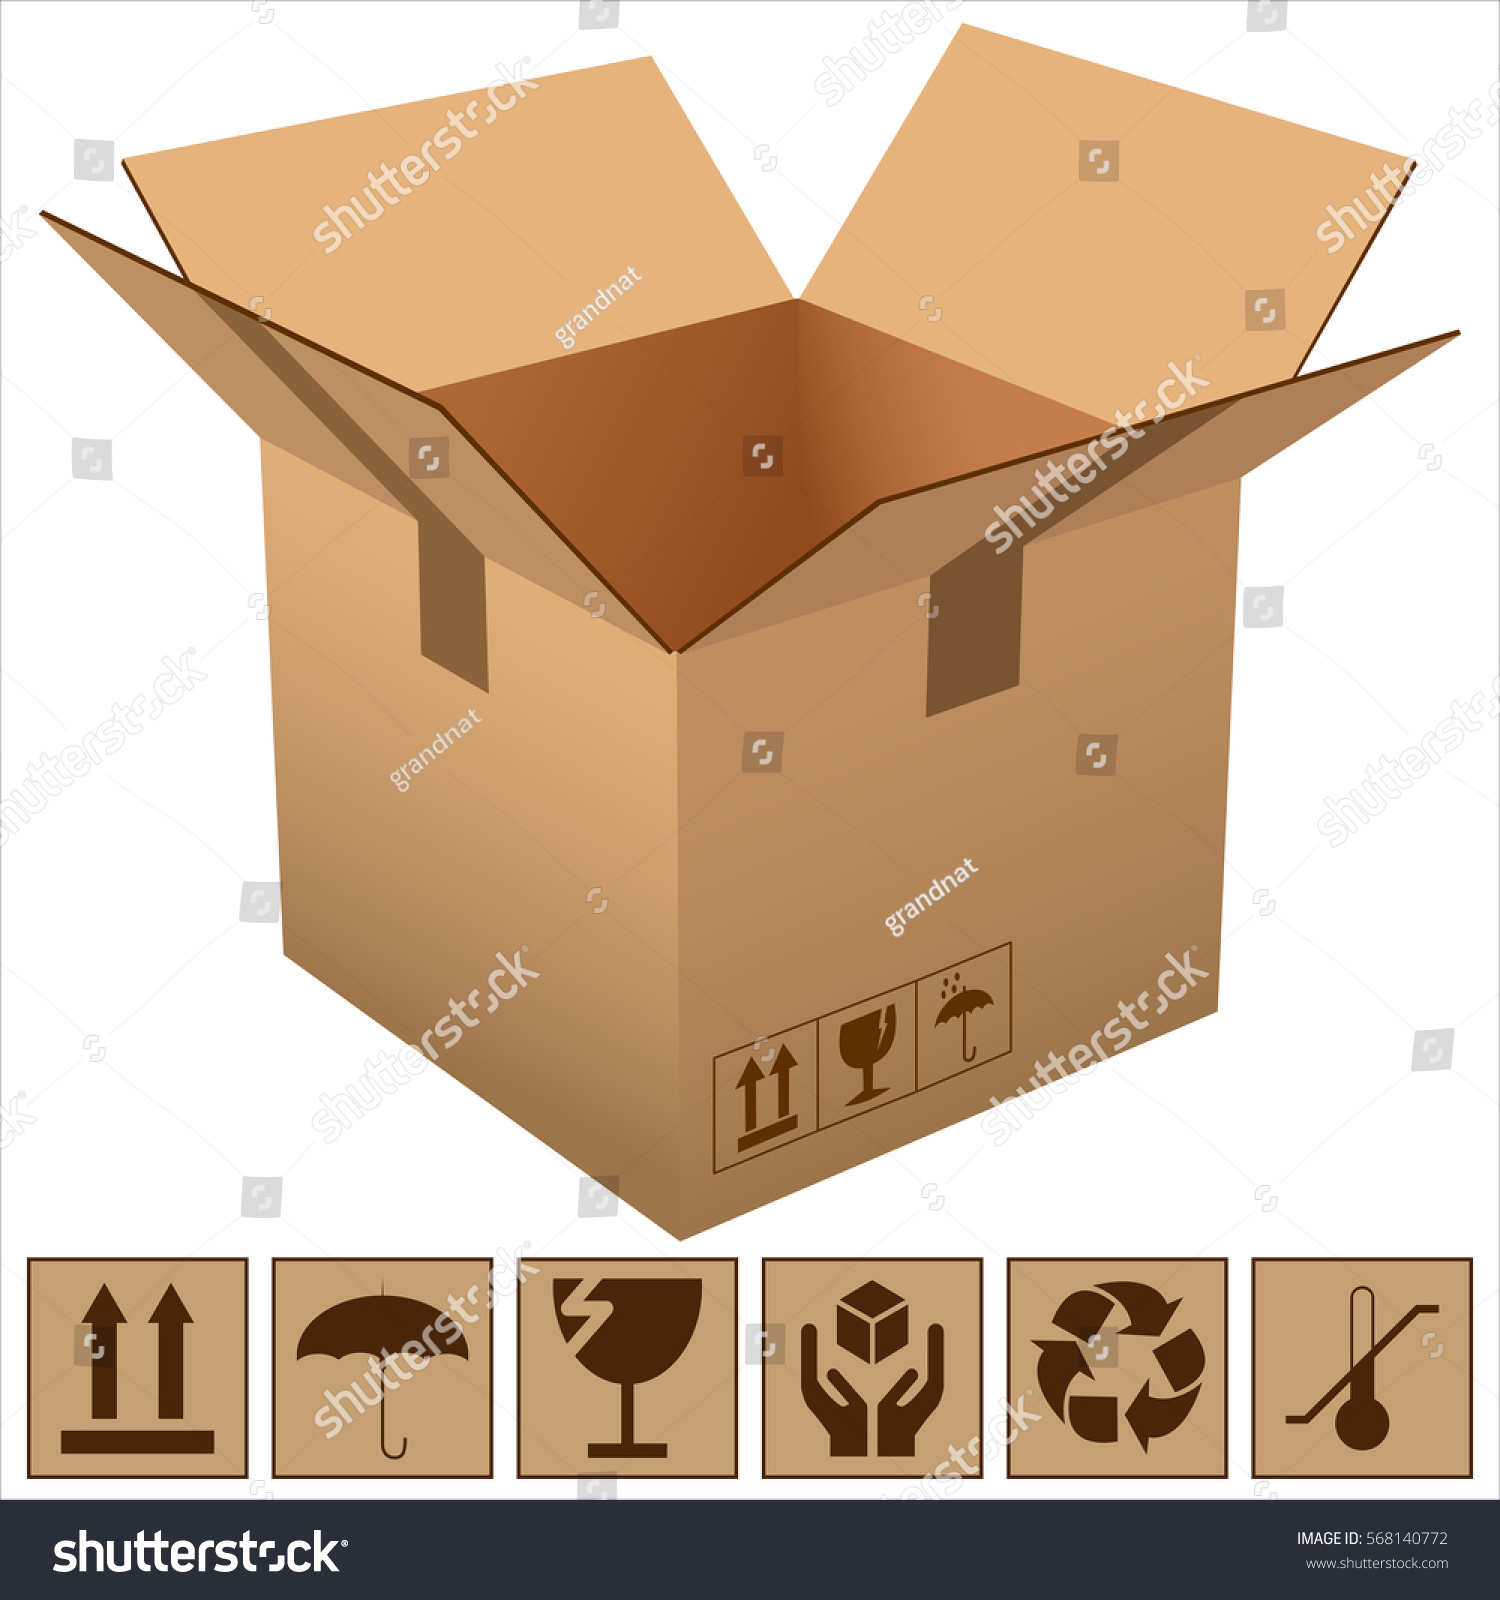 Download Edit Vectors Free Online - cardboard box | Shutterstock Editor